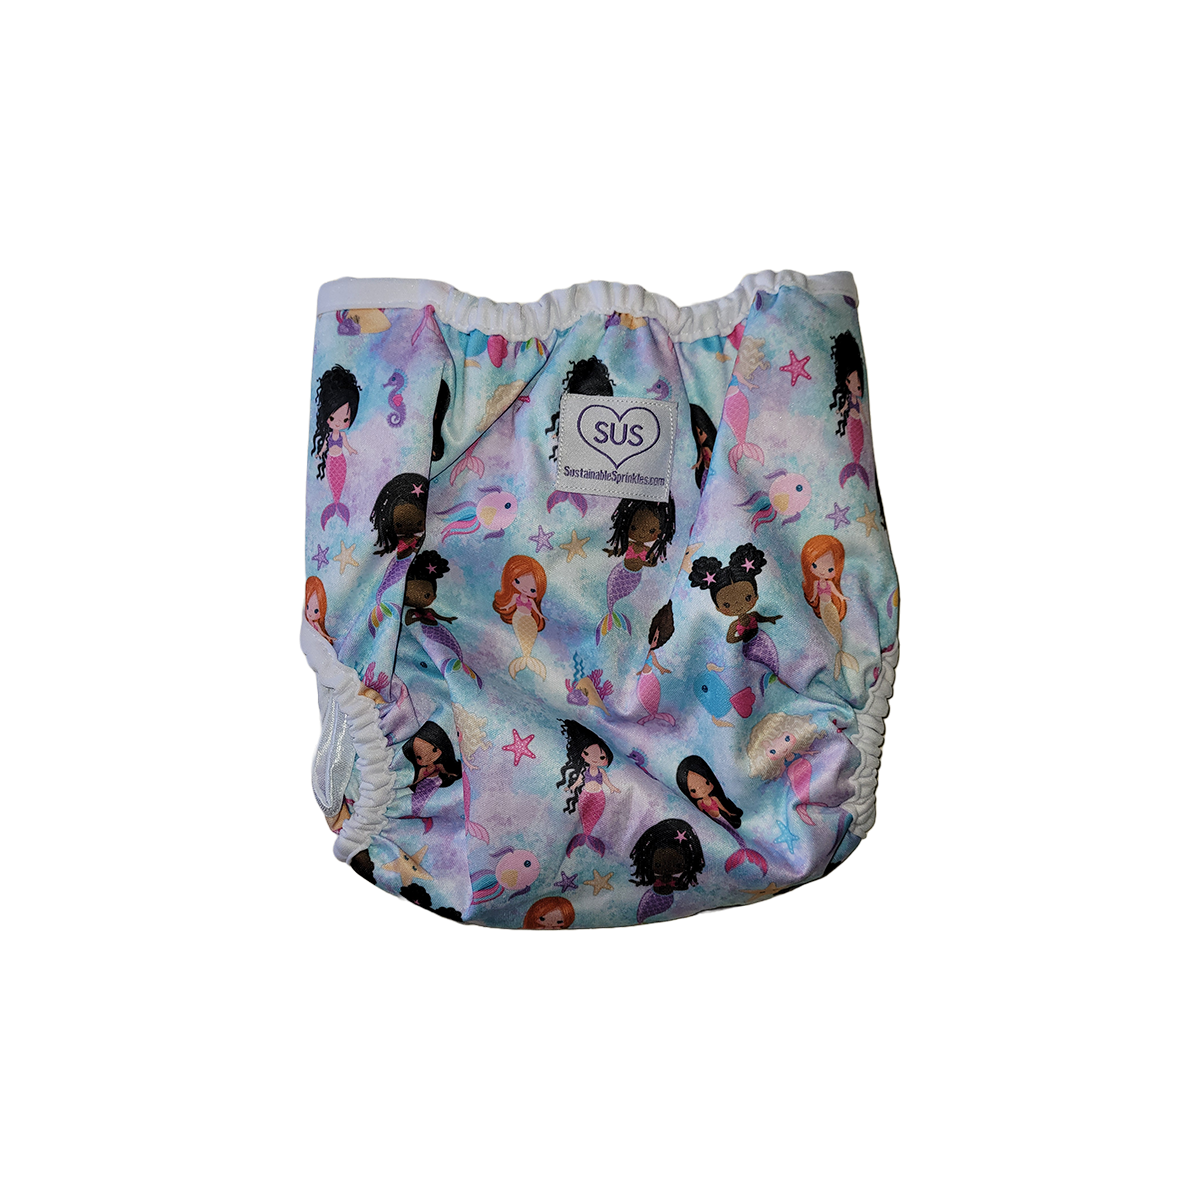 Diaper Cover sizes XL/Mega - Lorelei